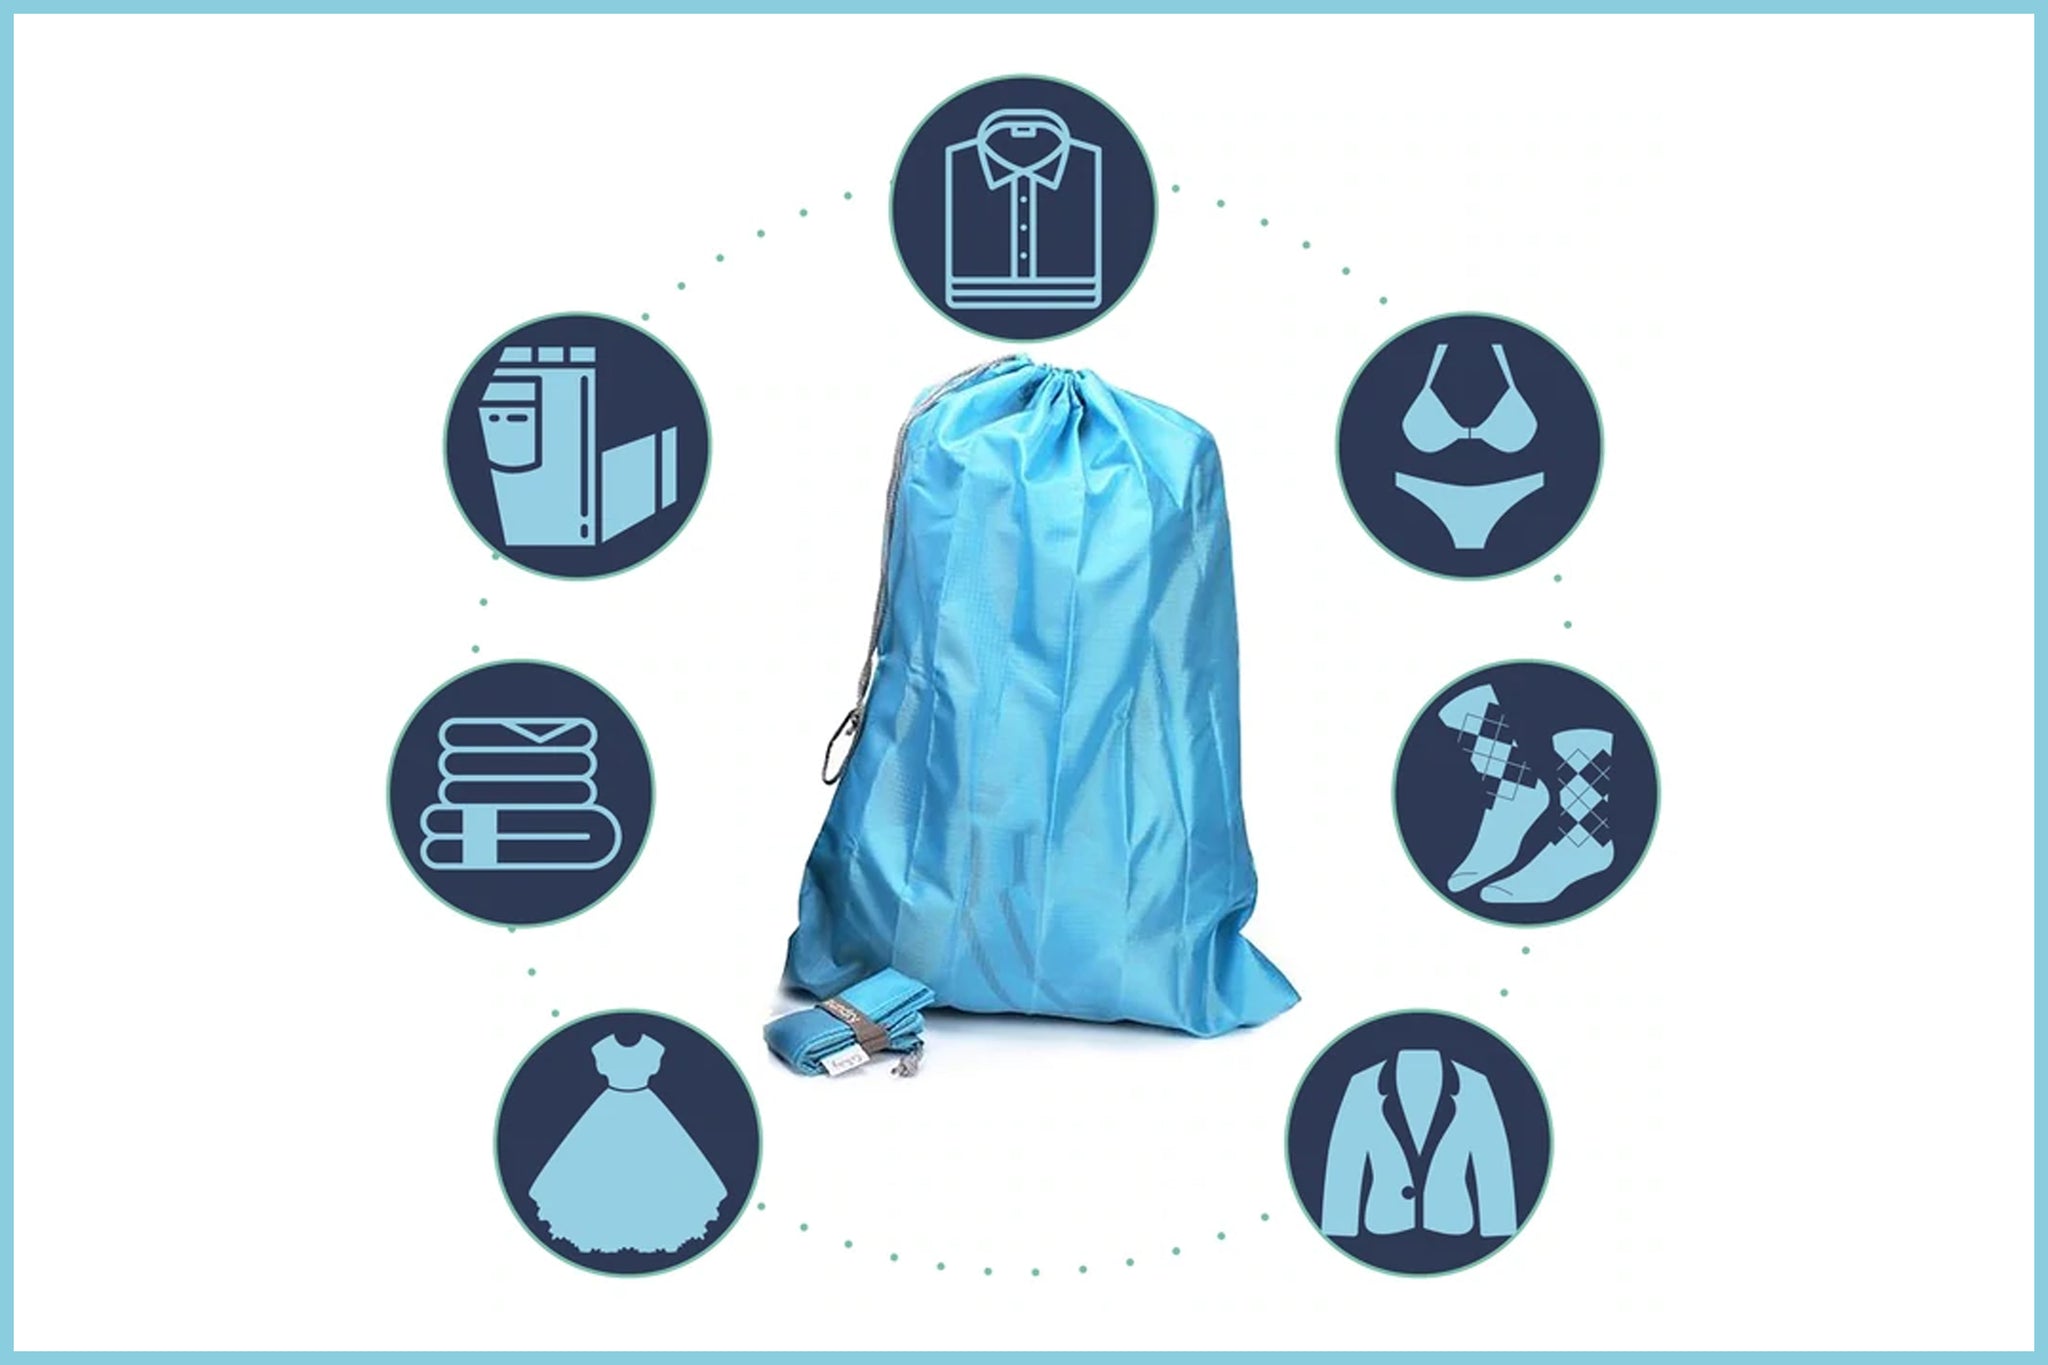 LB - Ultra Lightweight Anchor's Away Laundry Bag – Travel Laundry